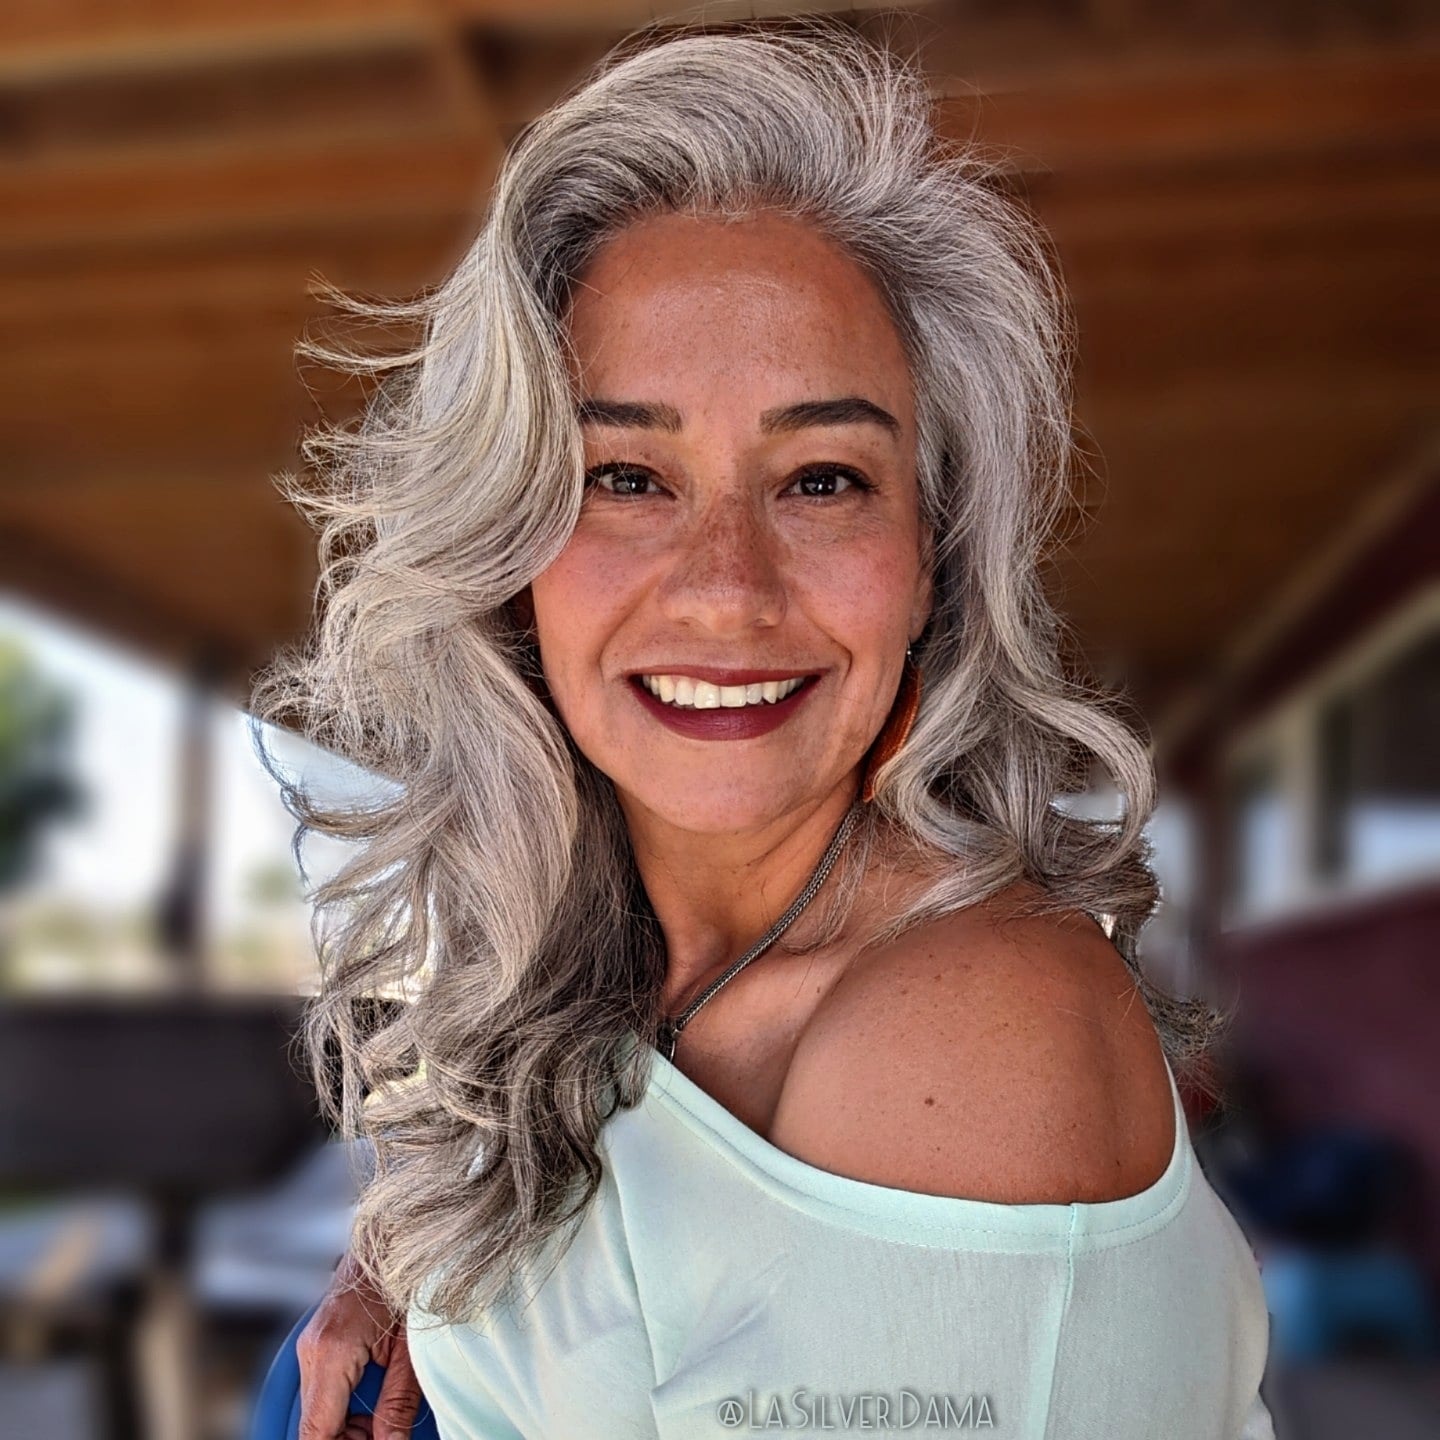 #california #freckles#selfportrait#beautyatanyage#morenaplateada#latinabella #keepactive #maturebeauty #grayhair #greyhair #artinaging #proage #ageposi